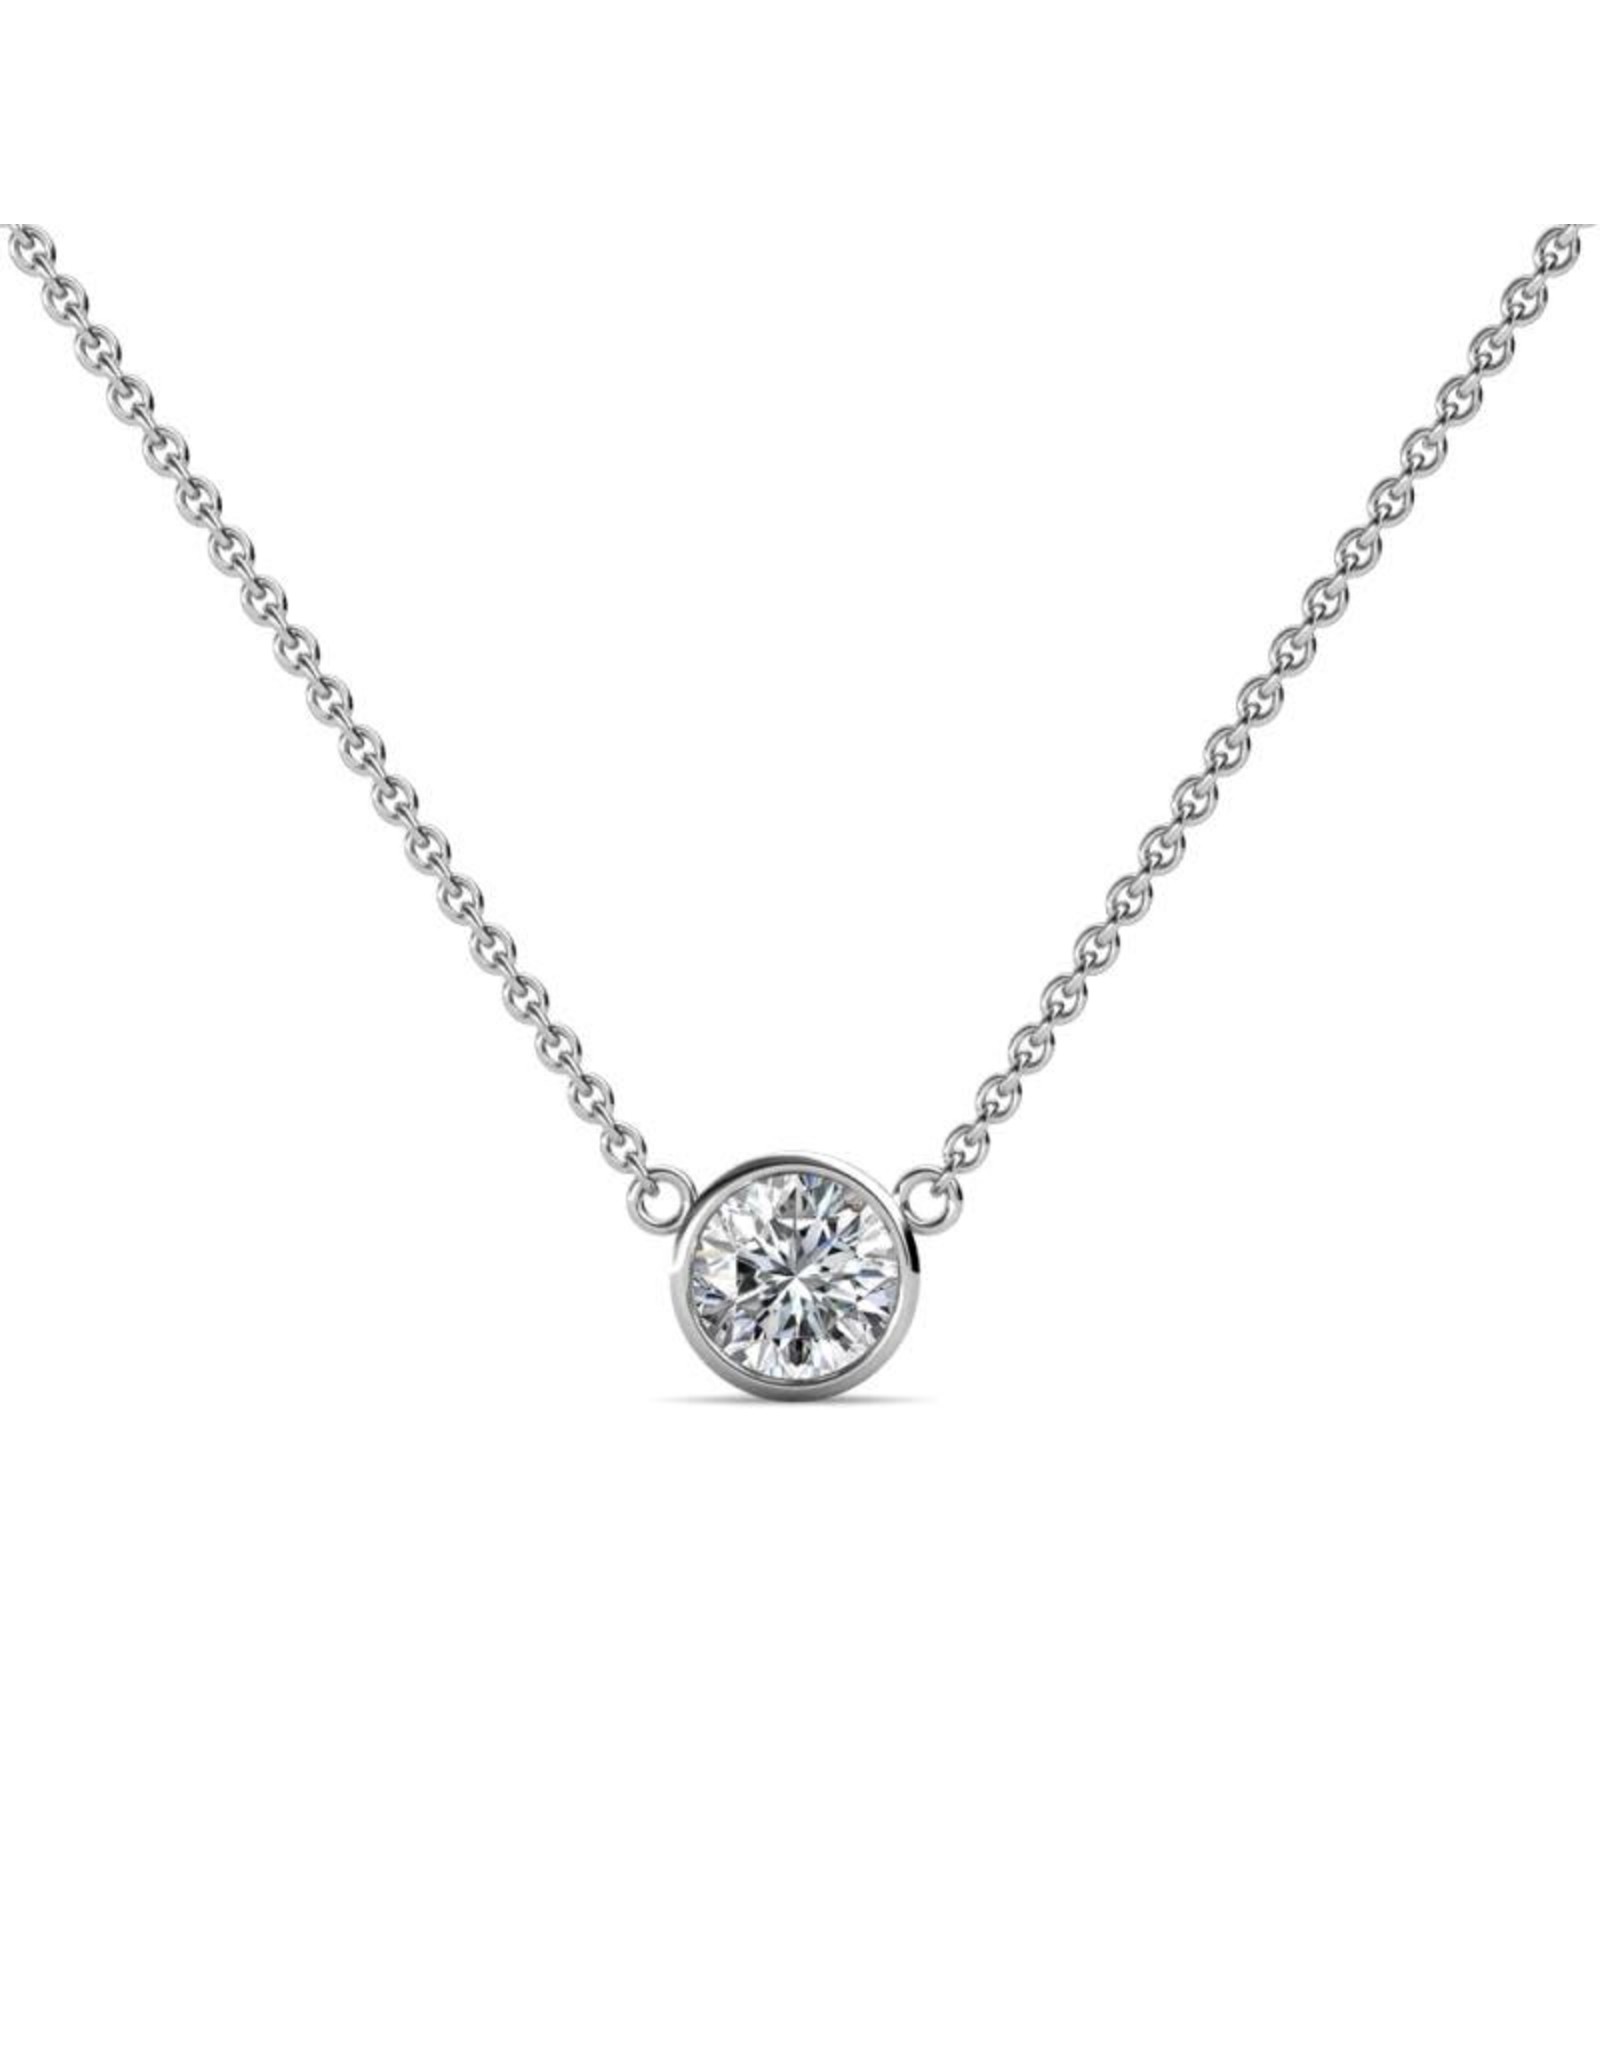 14K White Gold Diamond Solitaire Necklace, D: 0.60ct,  16"